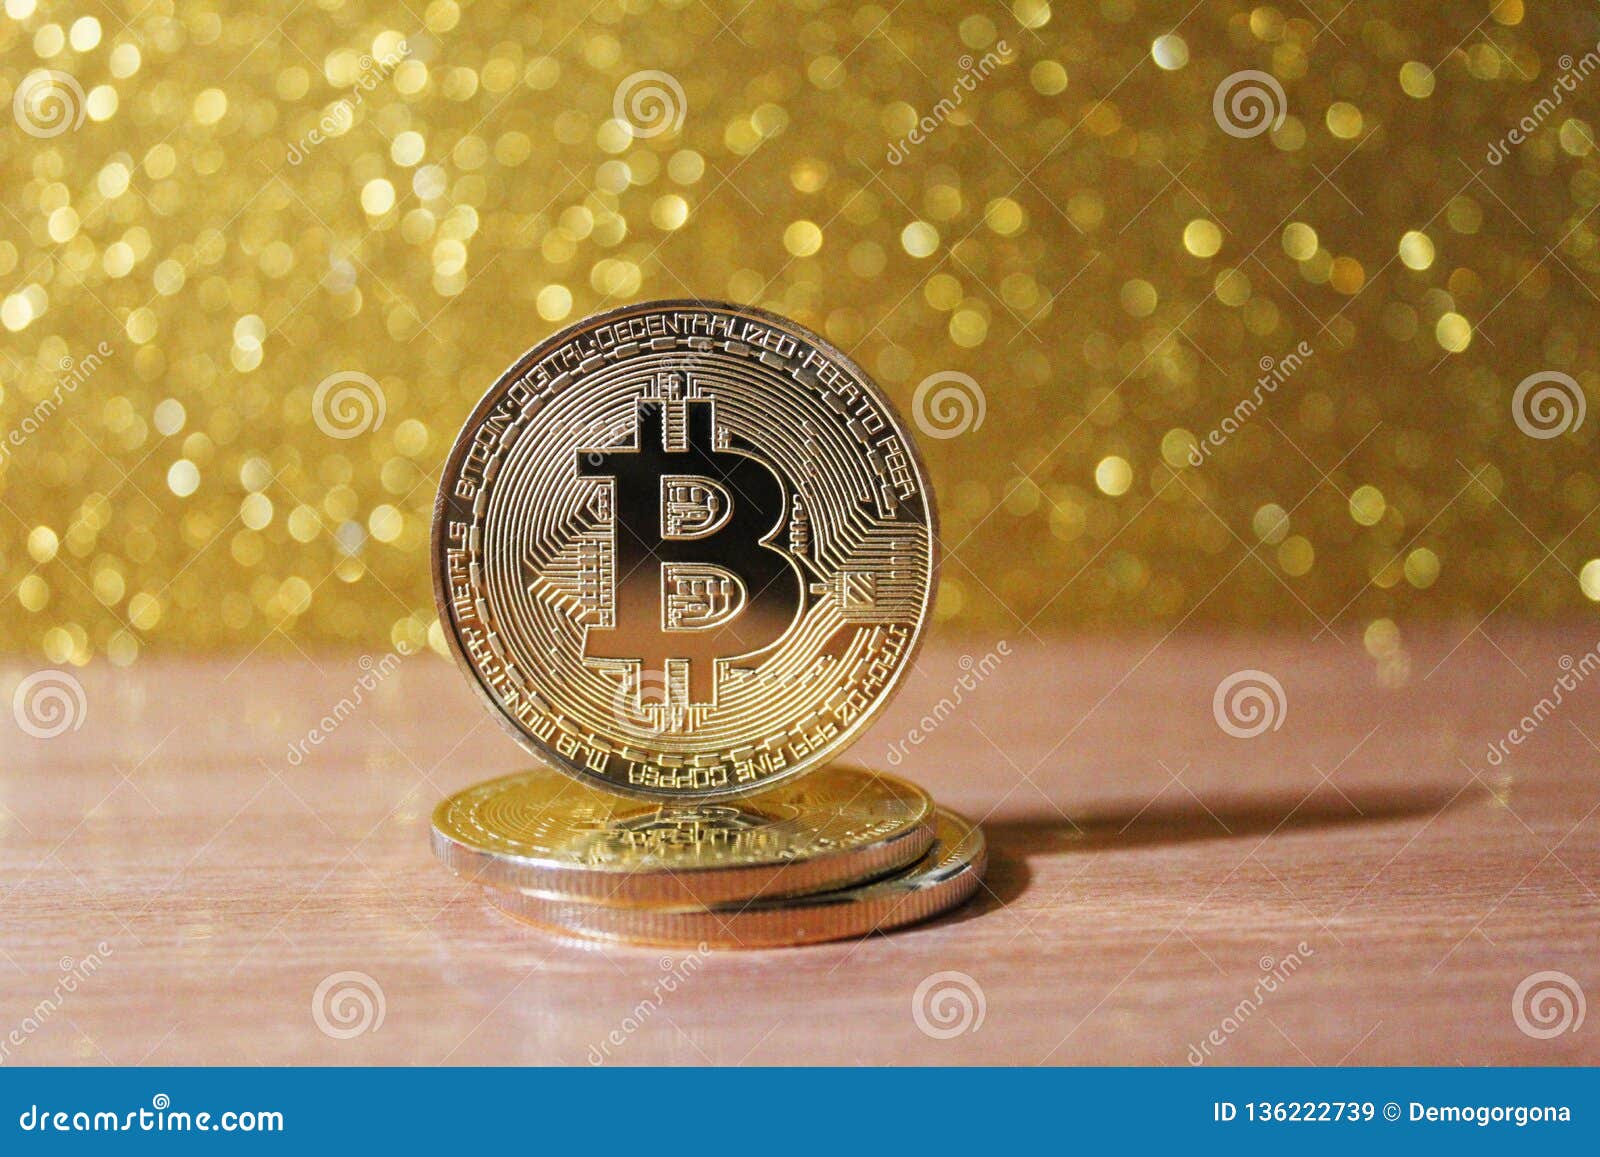 Bitcoin Gold (BTG) price